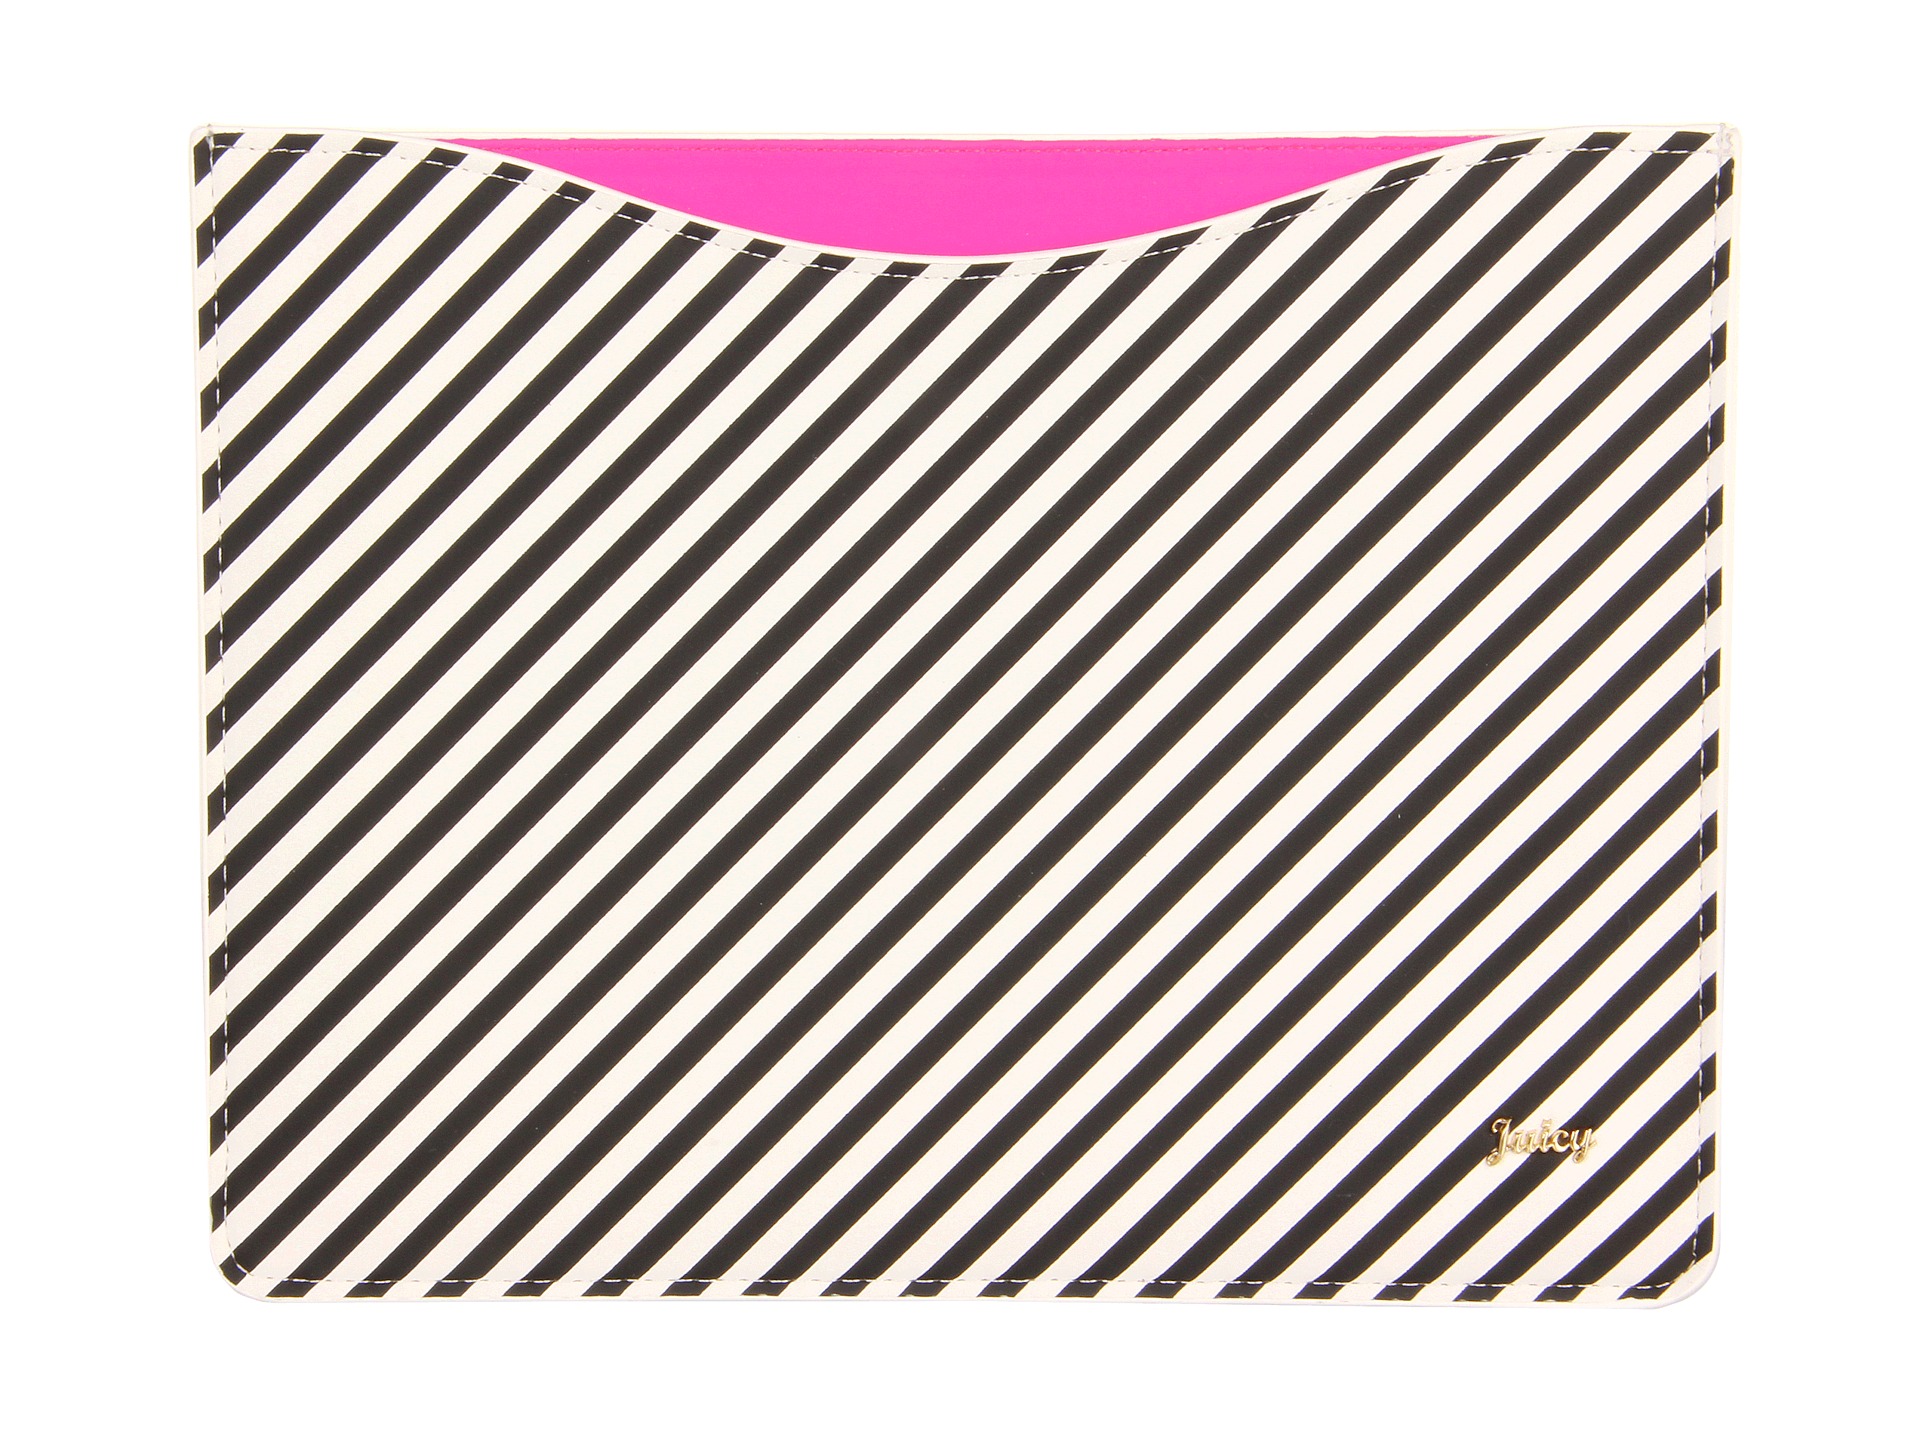 Juicy Couture Diagonal Stripe Tablet Sleeve $42.99 $48.00 SALE